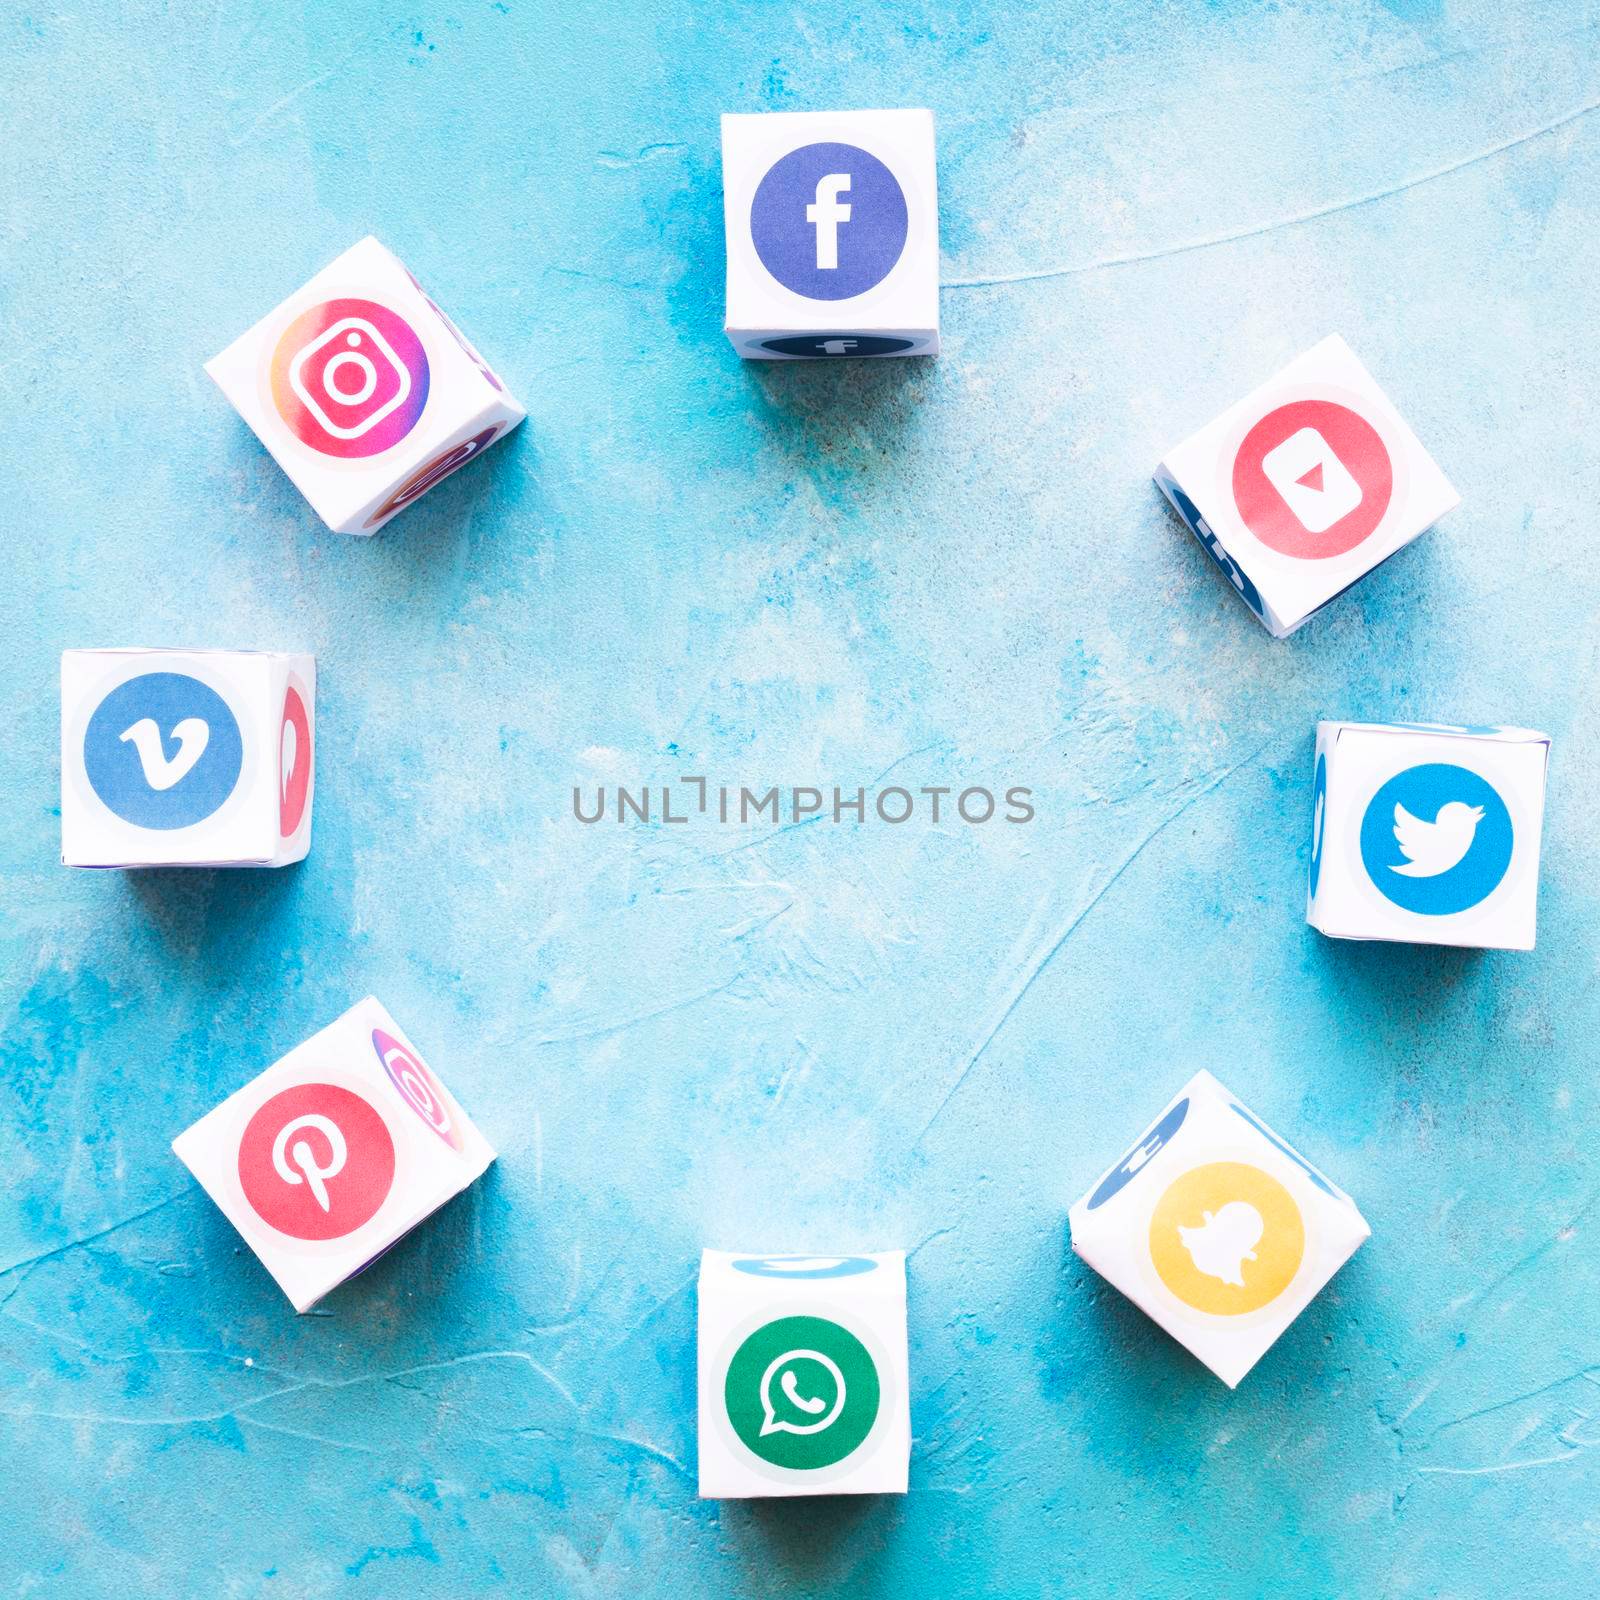 blocks social media icons arranged circular shape textured background. High quality photo by Zahard